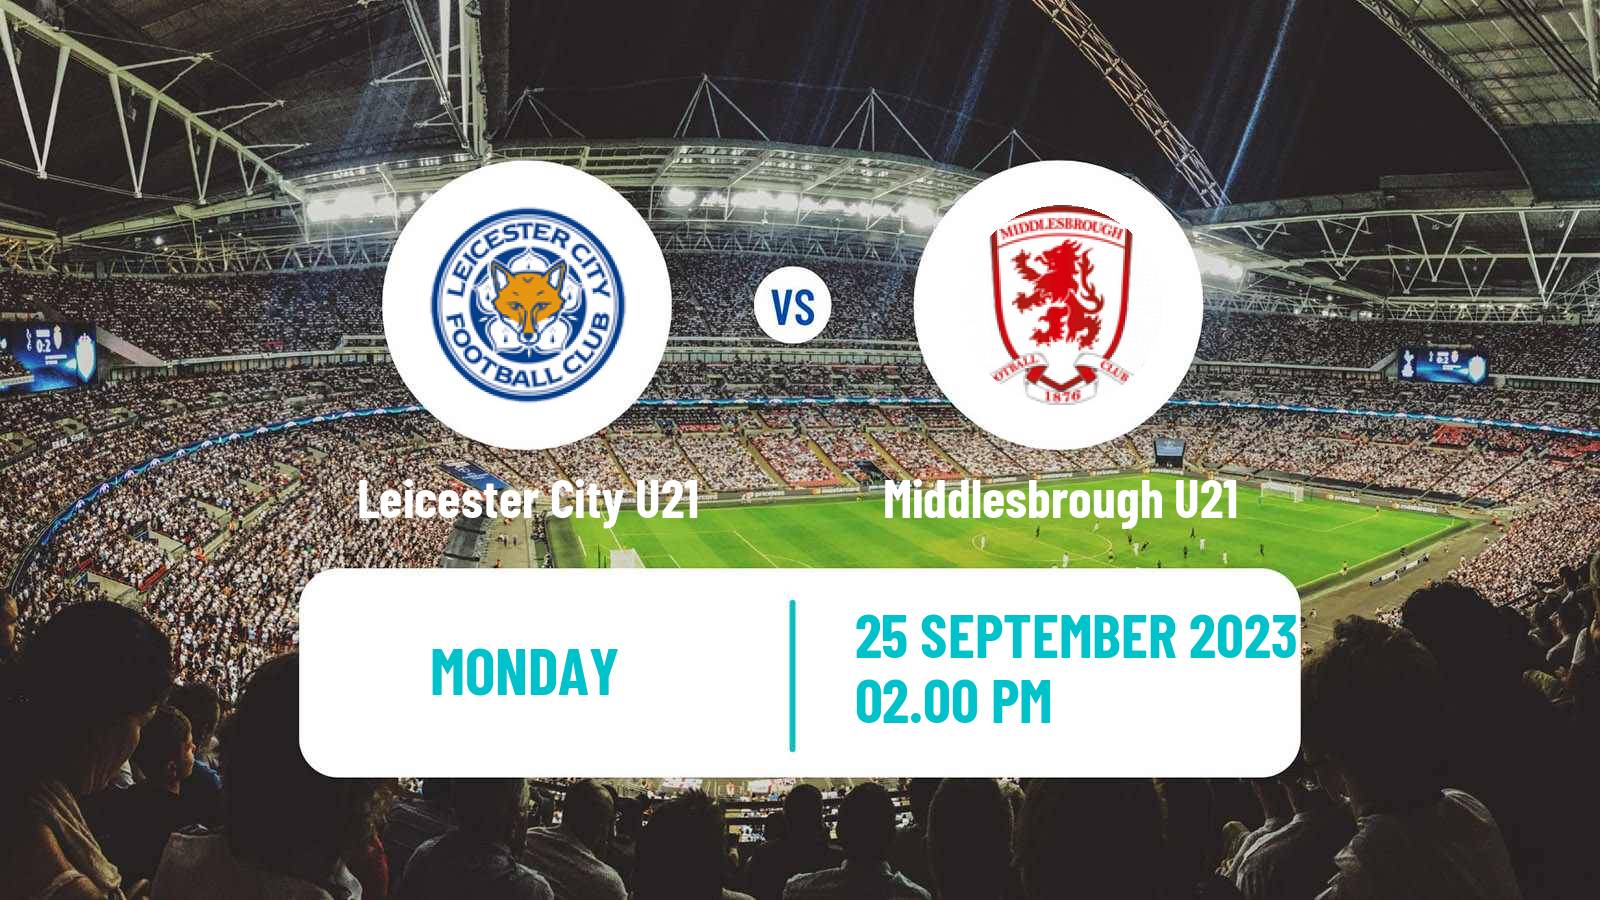 Soccer English Premier League 2 Leicester City U21 - Middlesbrough U21